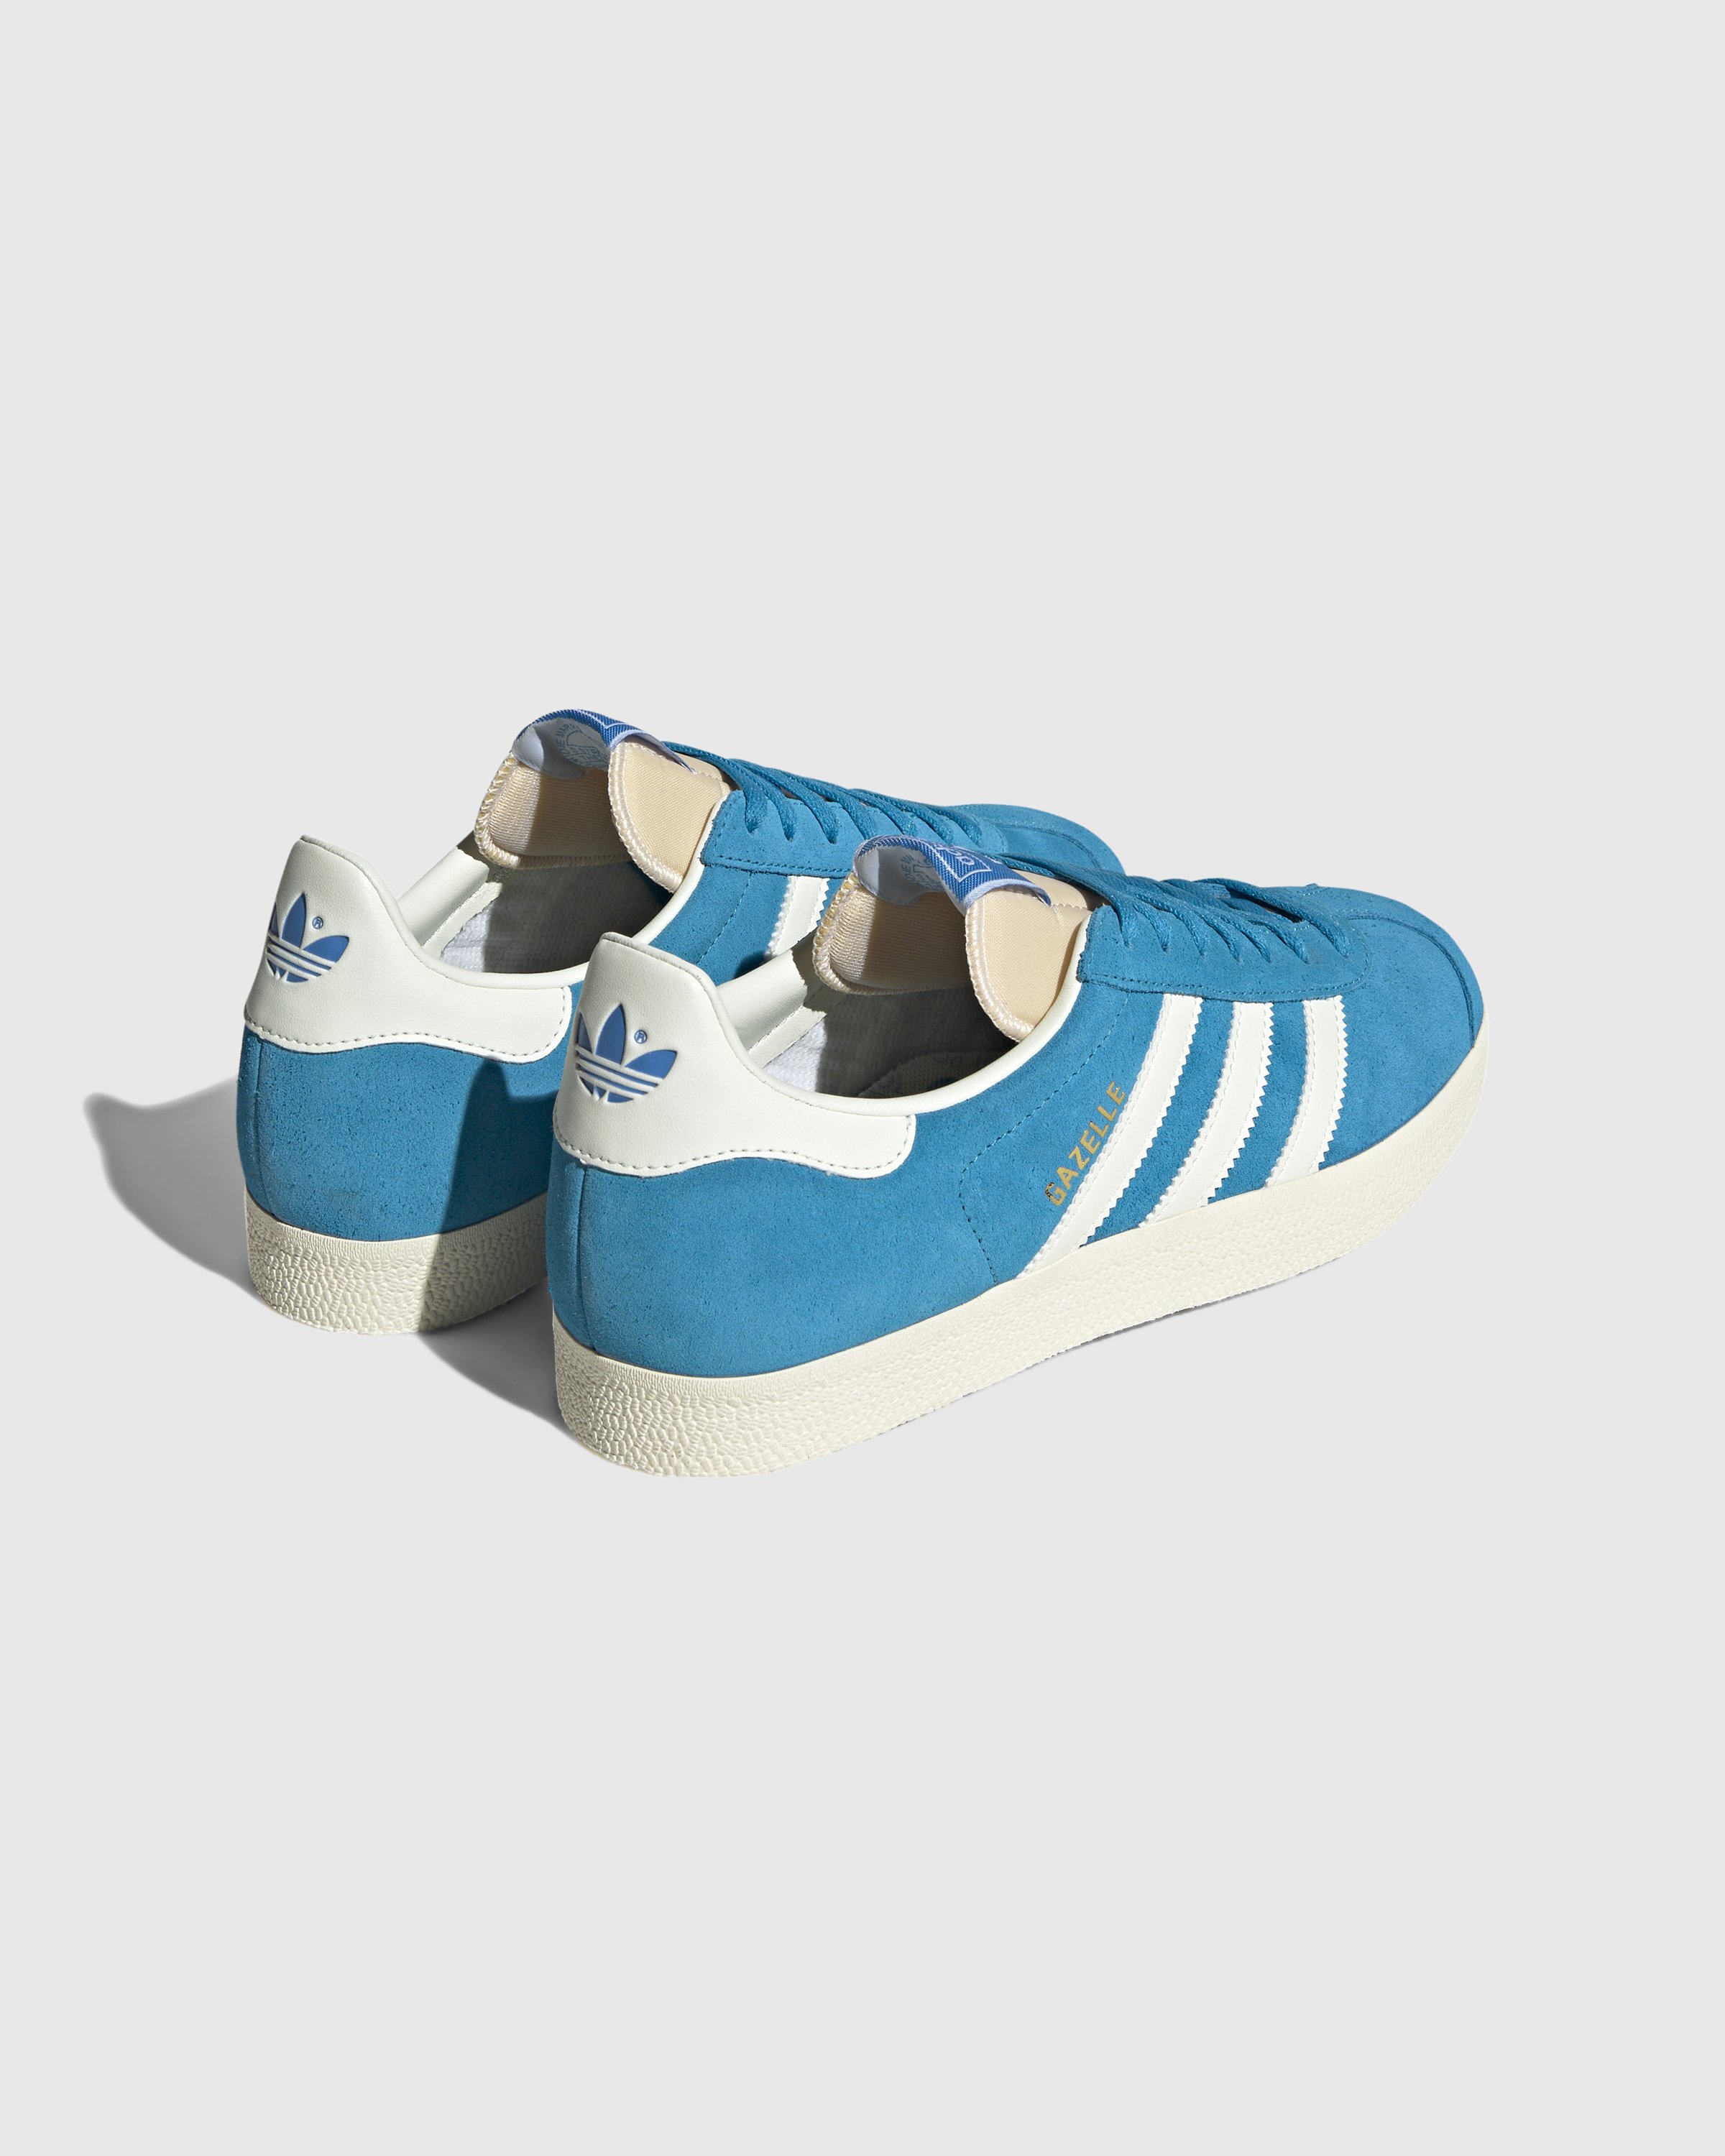 Adidas - Gazelle Aqua/White - Footwear - Blue - Image 4